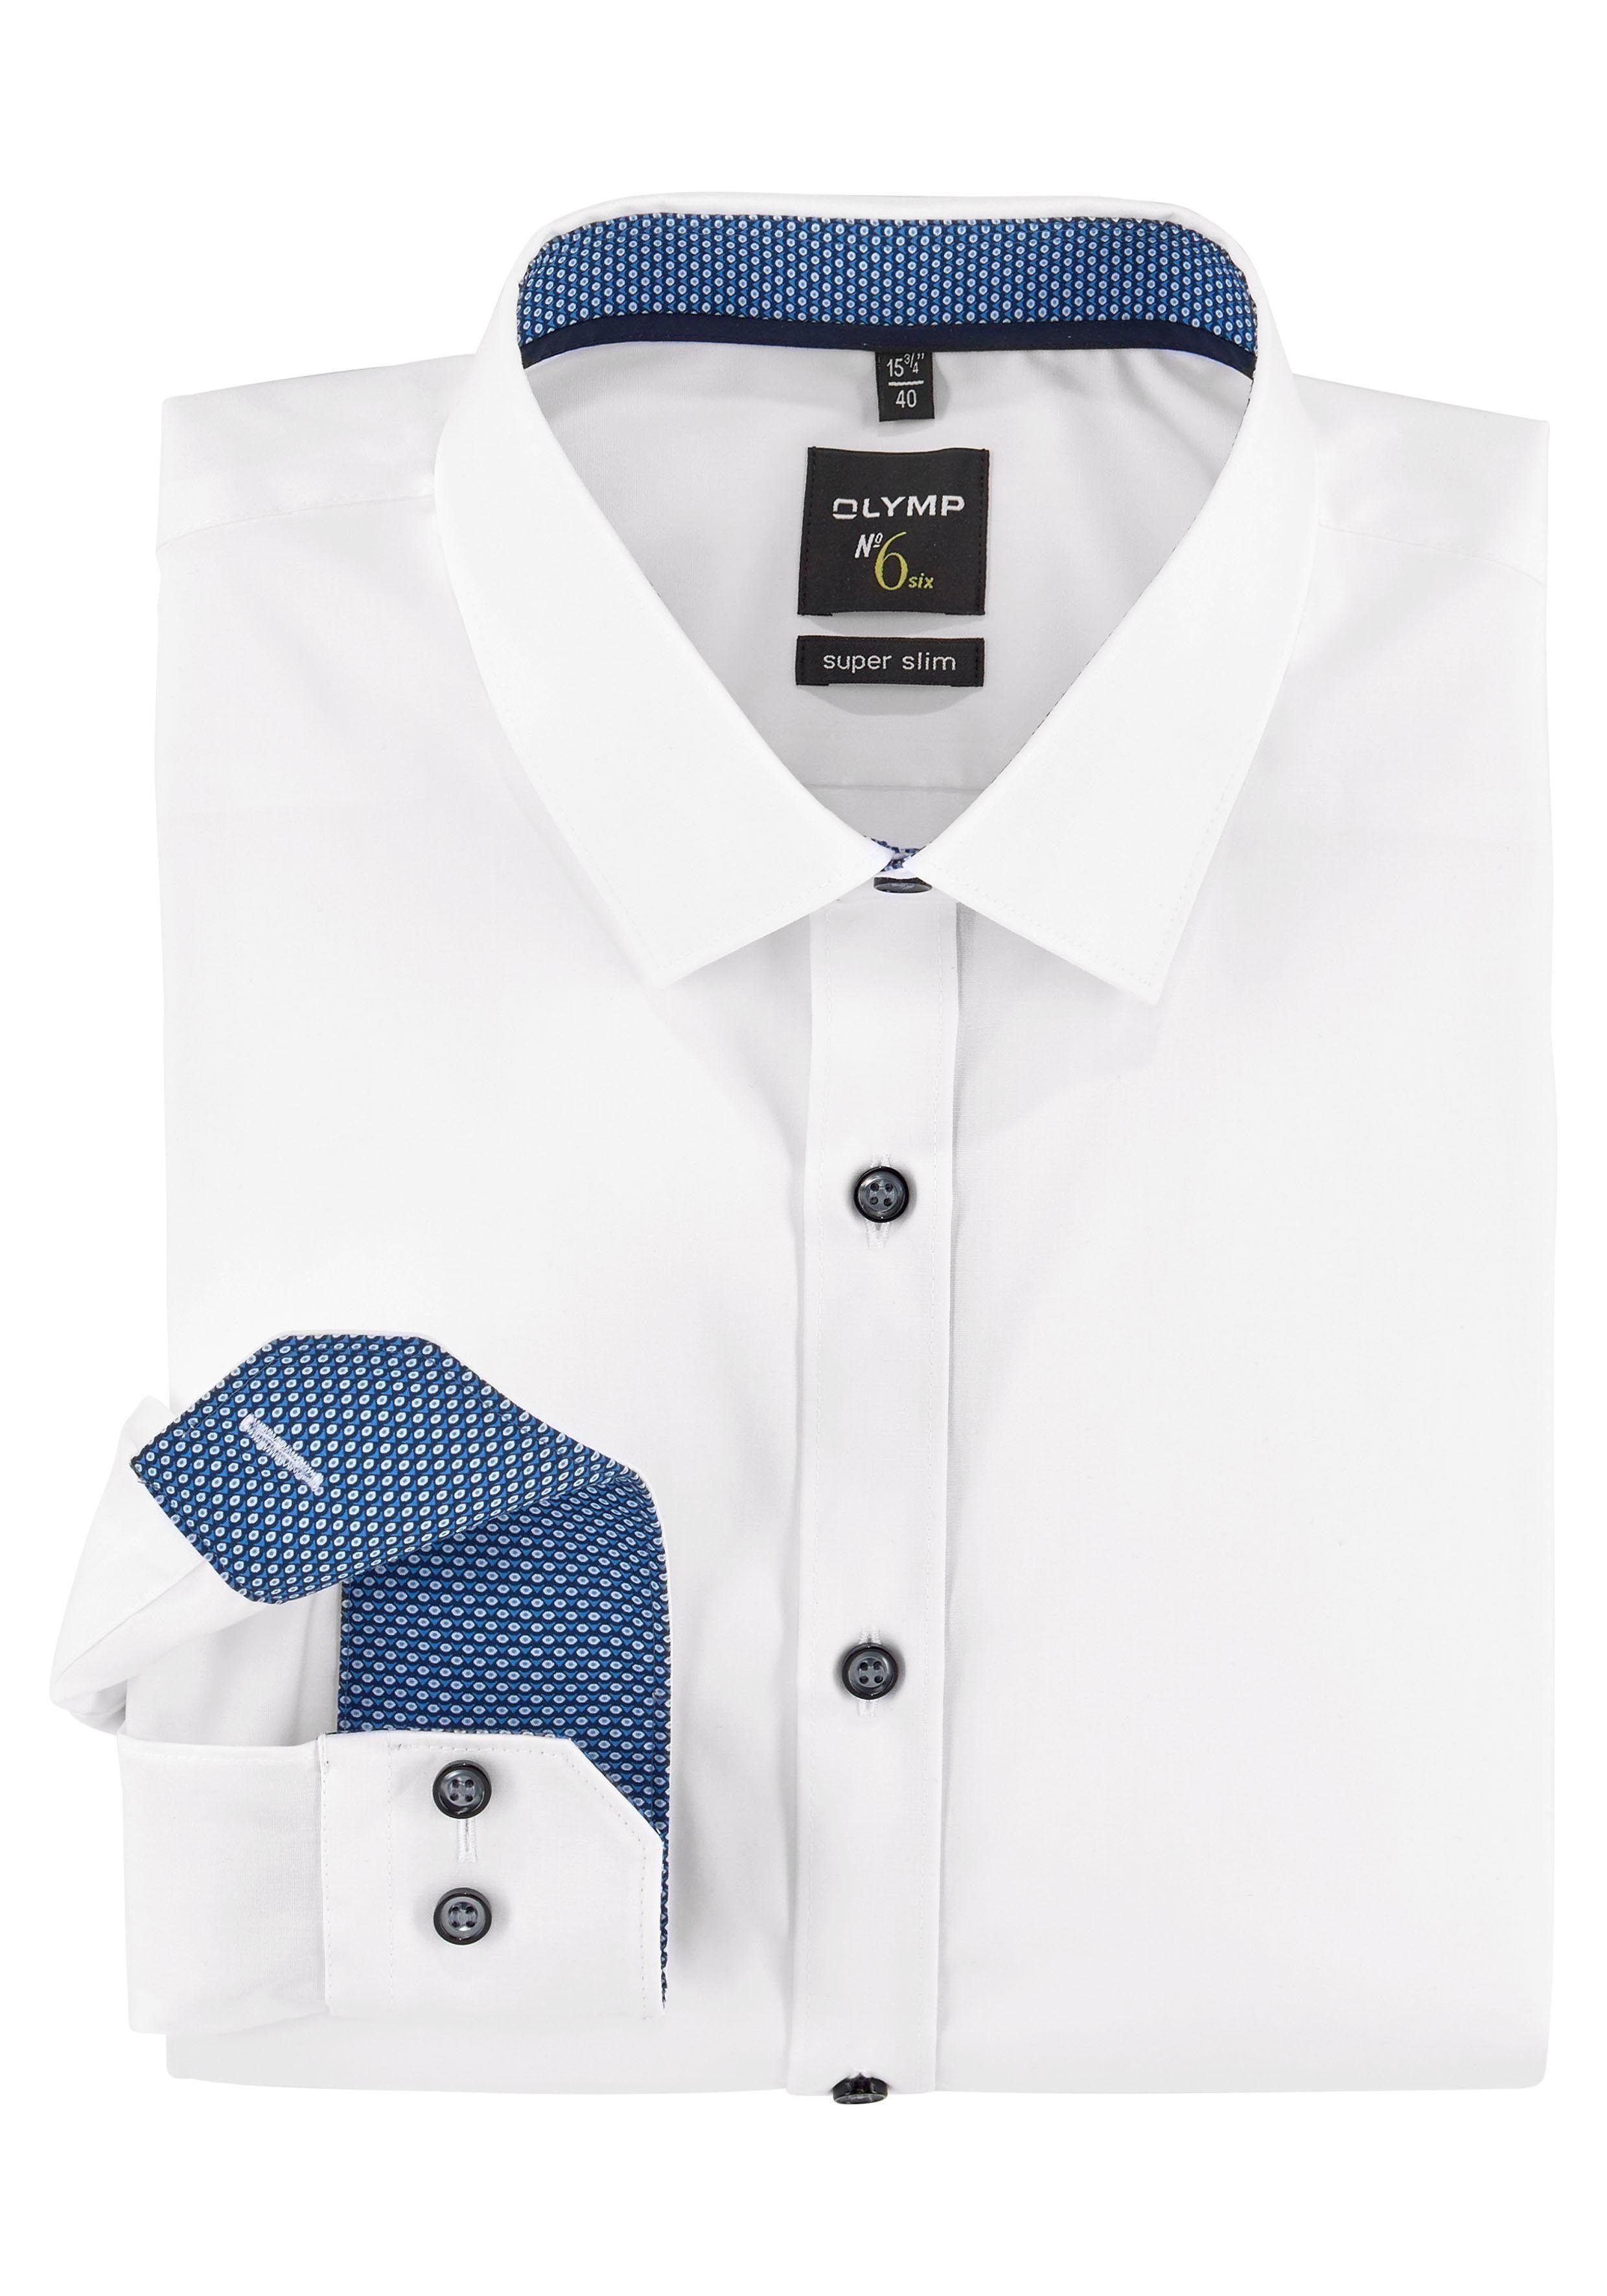 OLYMP Businesshemd No. super slim Details weiß-blau-kontrastfarbene Six